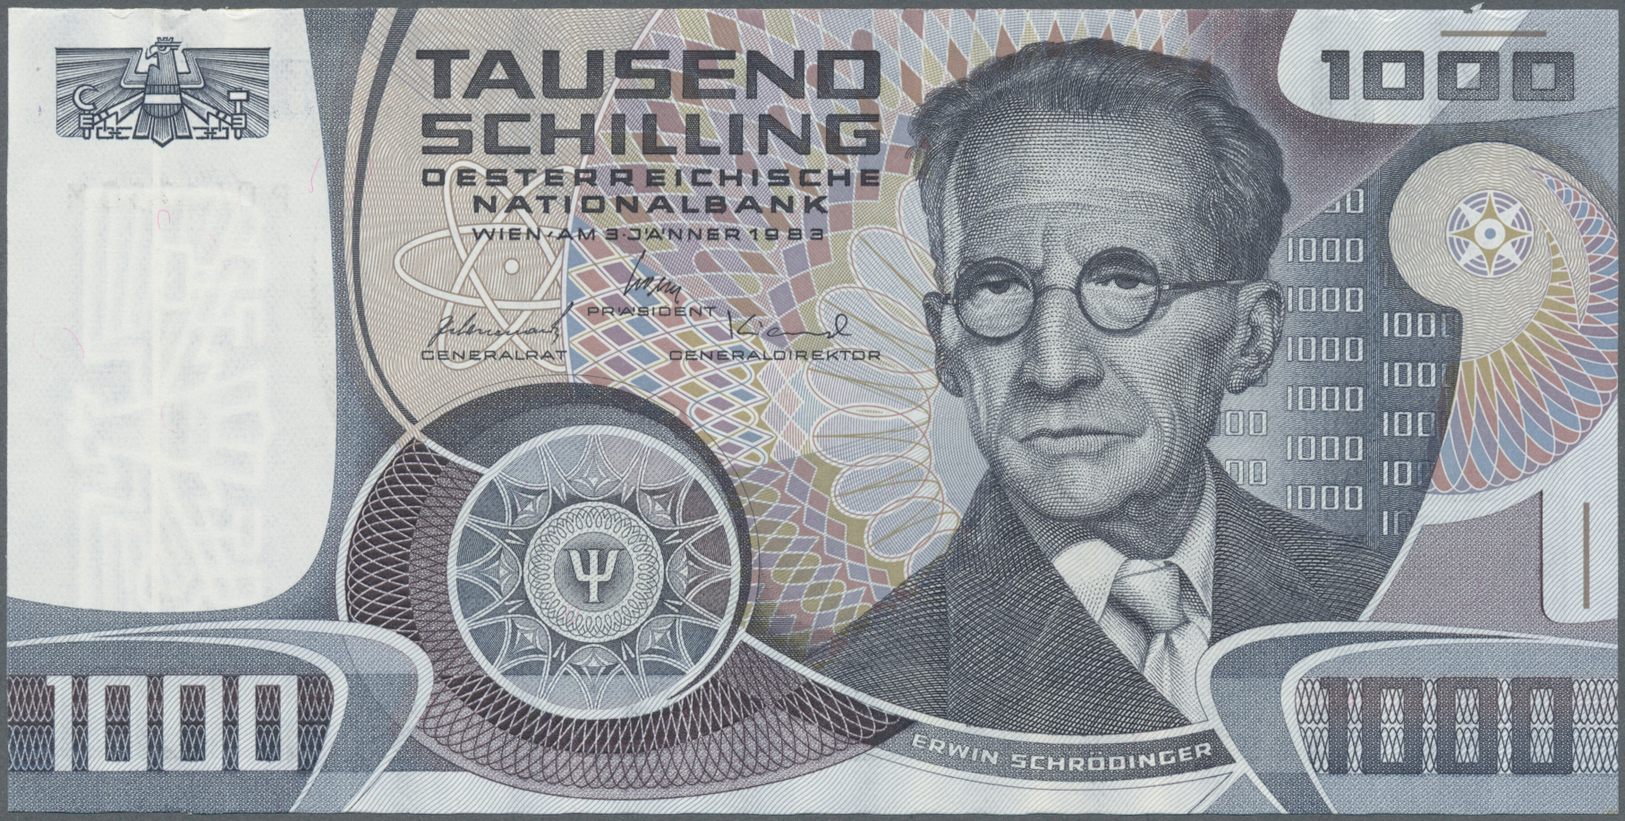 00197 Austria / Österreich: 1000 Schilling 1983, P.152 With Portrait Of Erwin Schrödinger In Nearly Perfect Condition, J - Austria